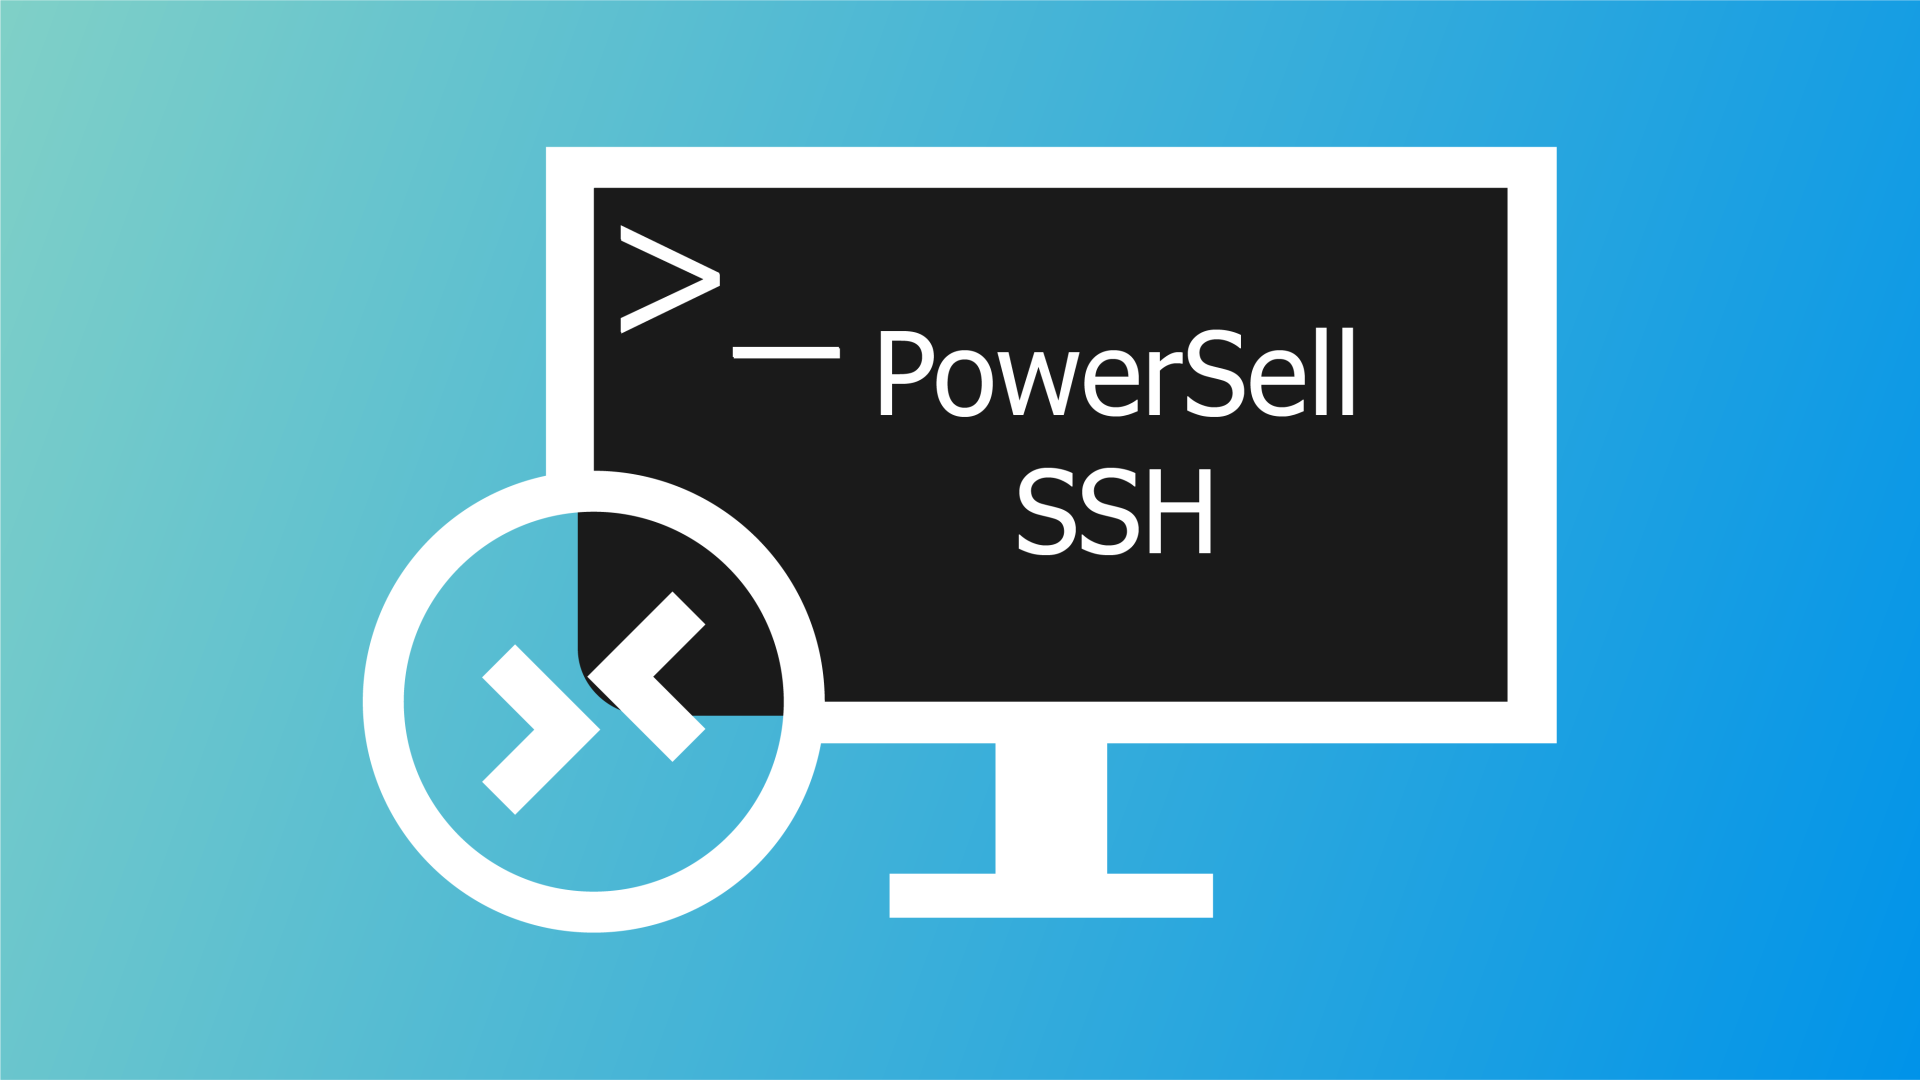 PowerSell SSH